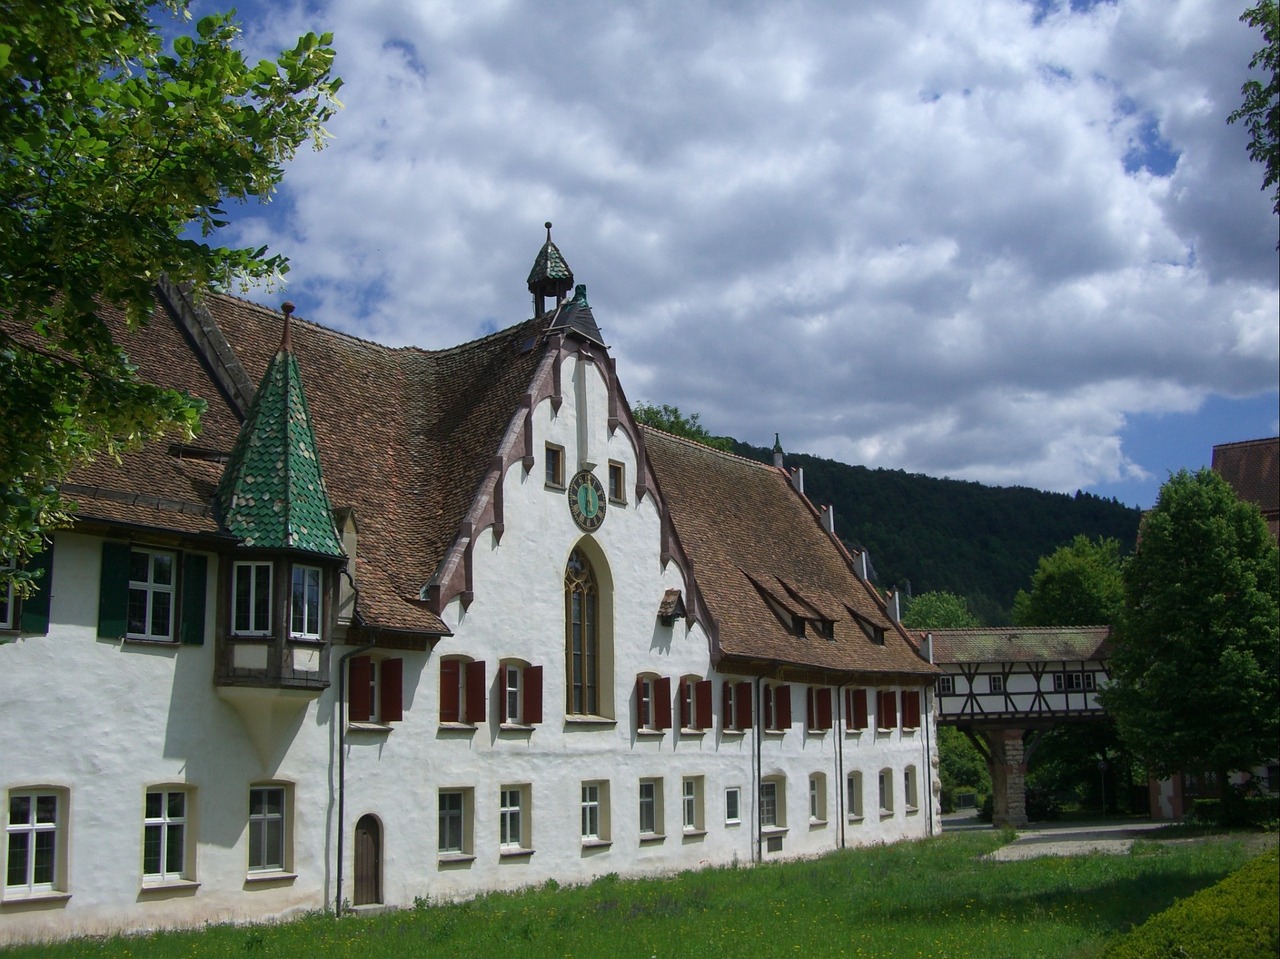 truss monastery fachwerkhaus free photo